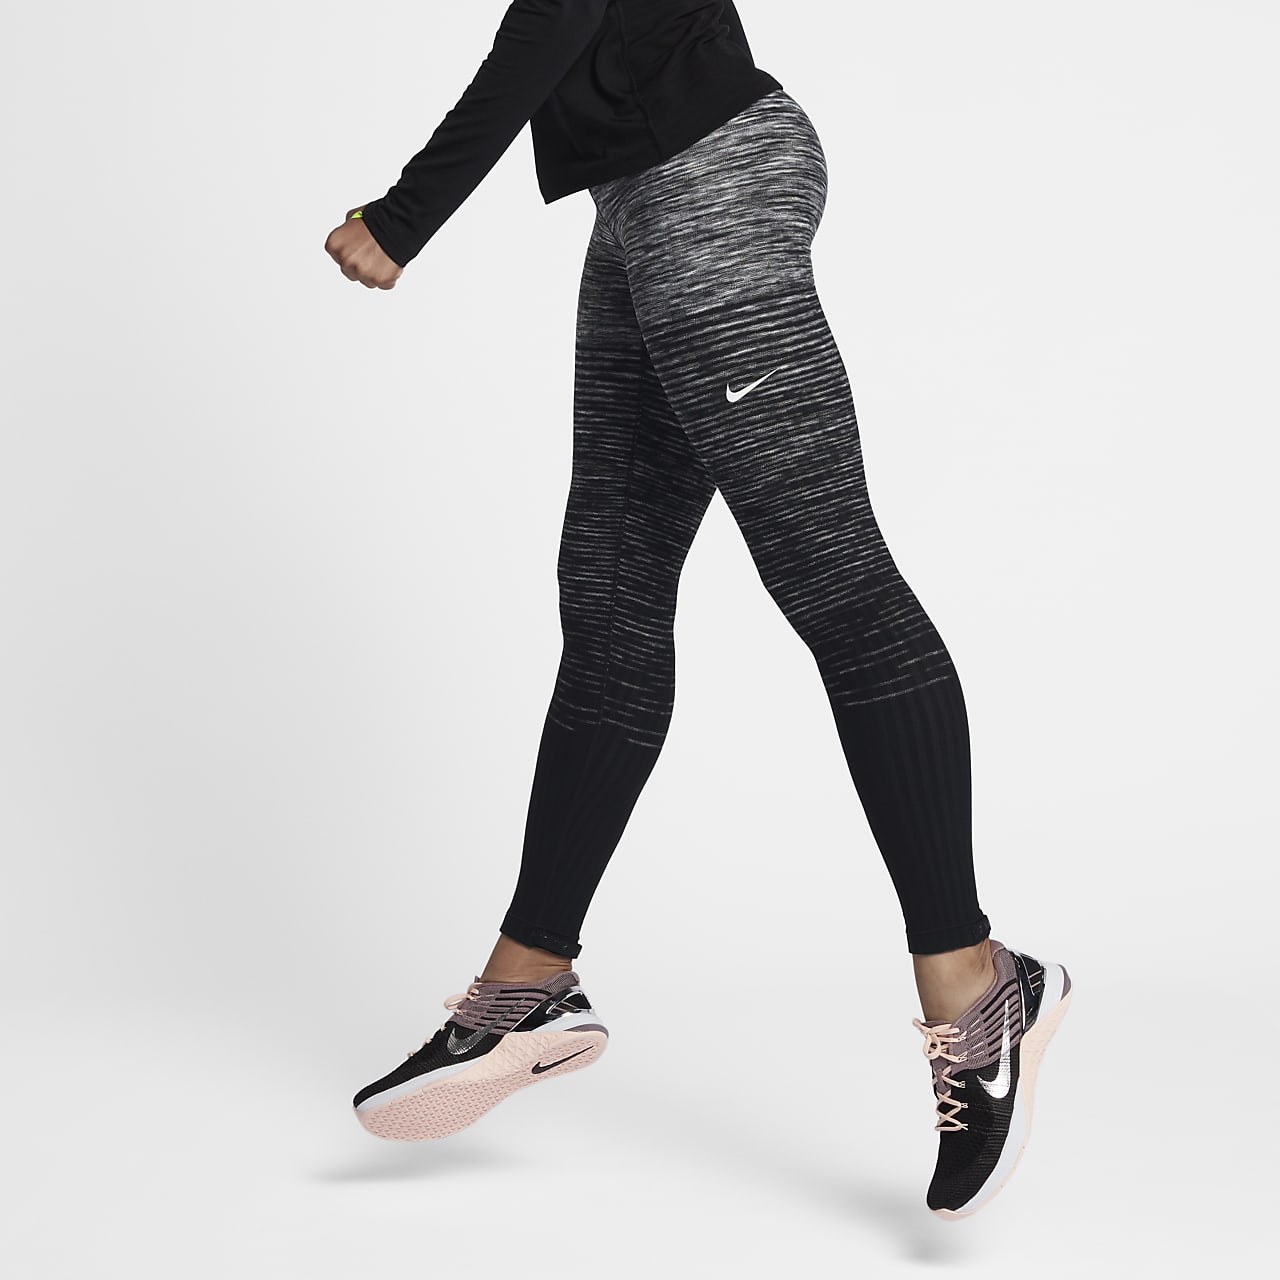 Nike Pro Hyperwarm Leggings - XS  Nike pros, Clothes design, Leggings